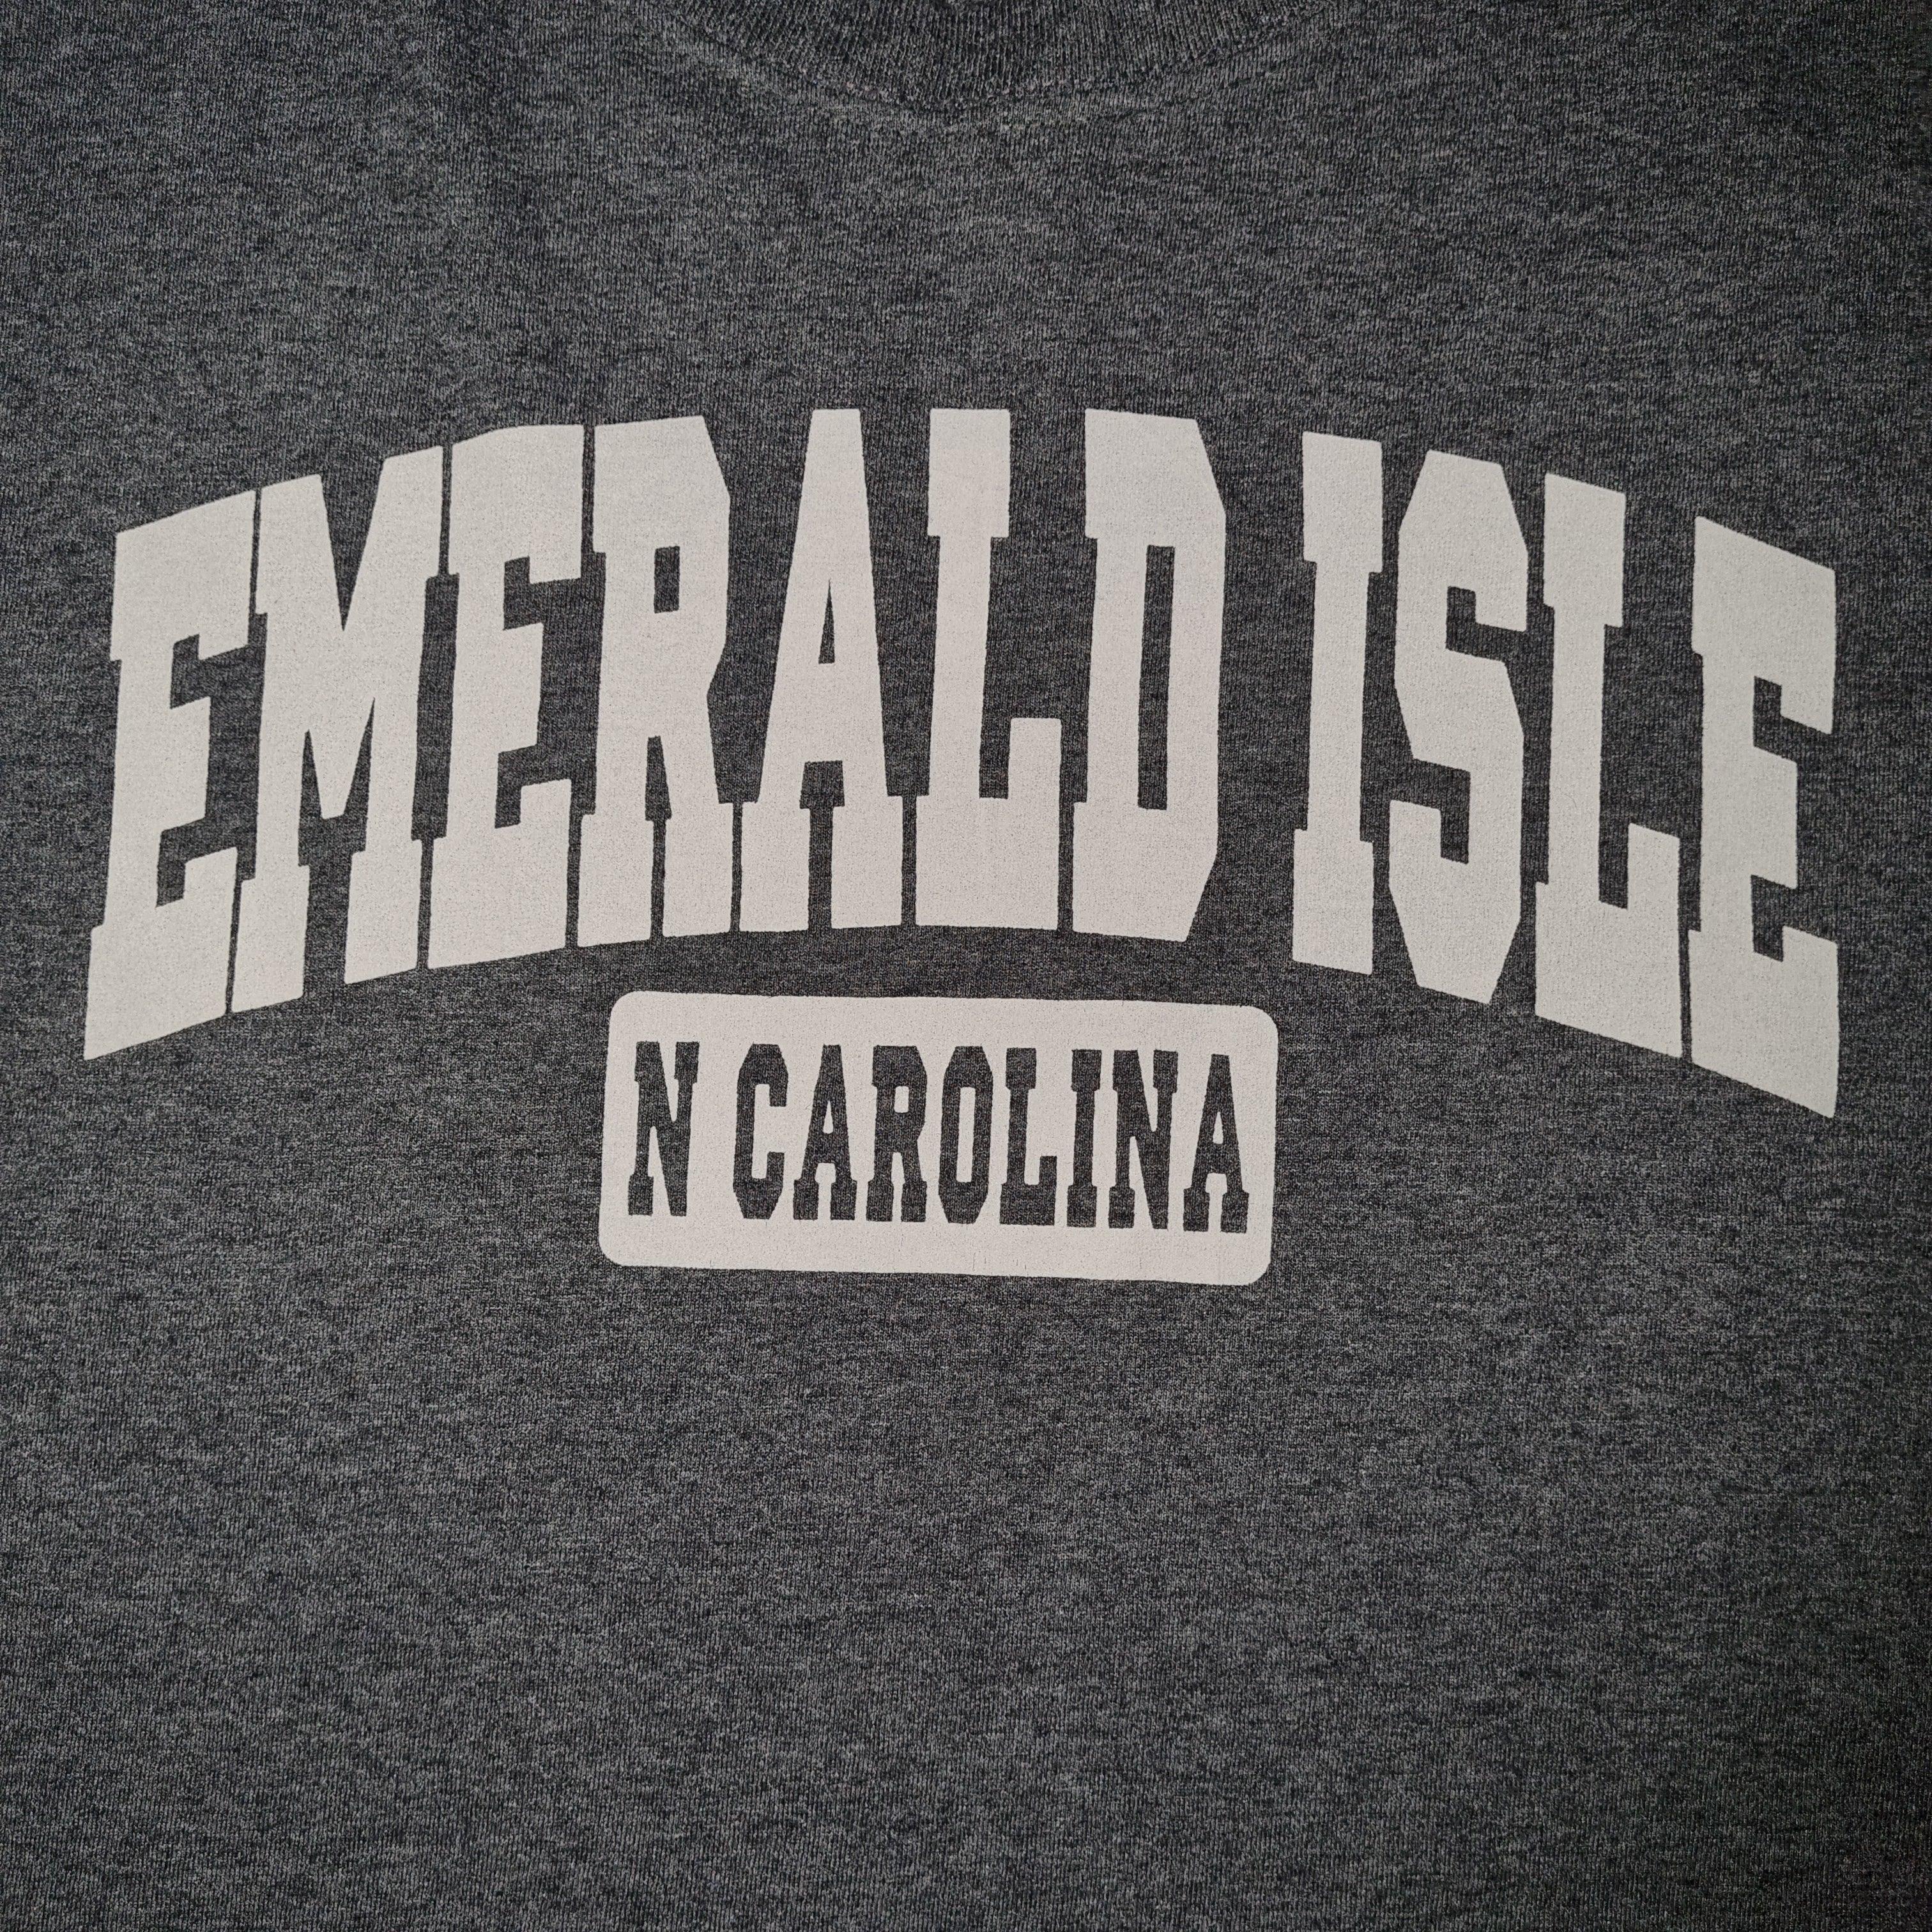 T-shirt N. Carolina Emerals Isle (S/M) - oldstyleclothing